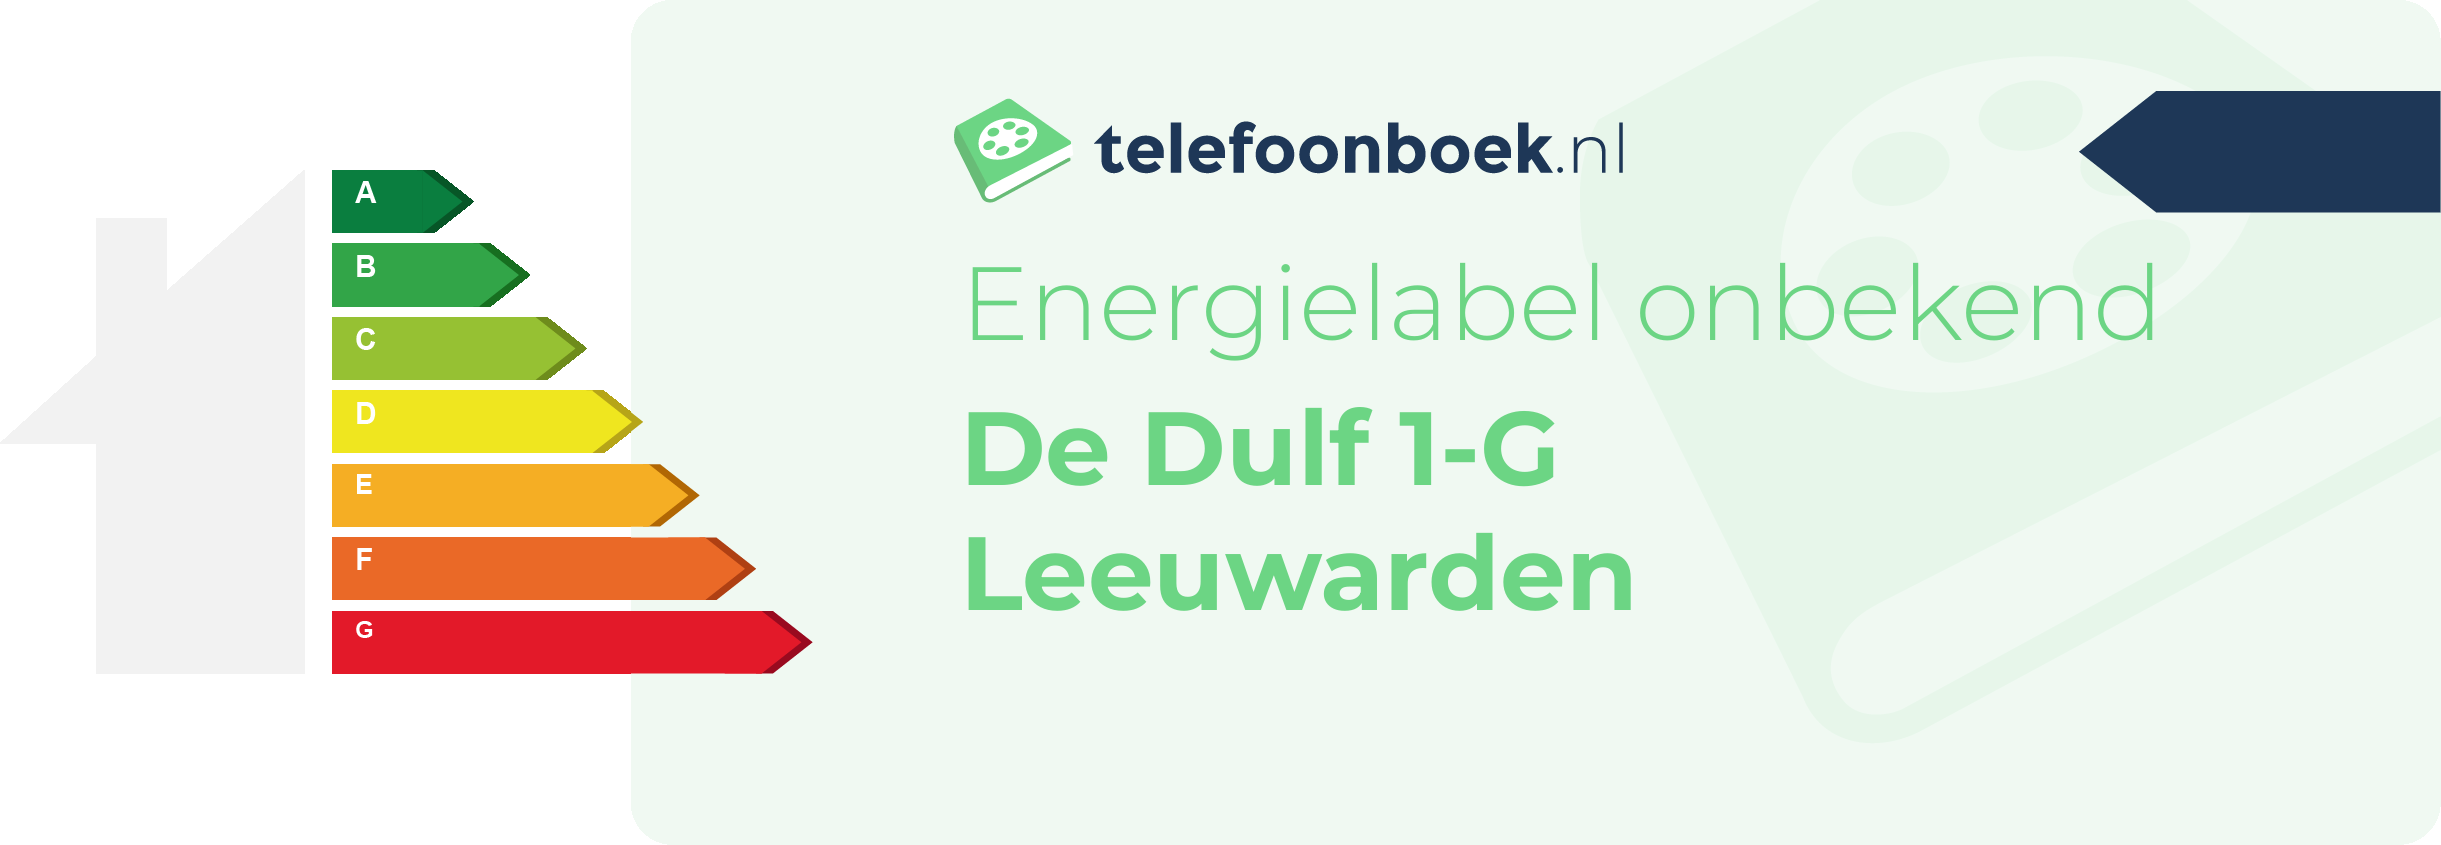 Energielabel De Dulf 1-G Leeuwarden